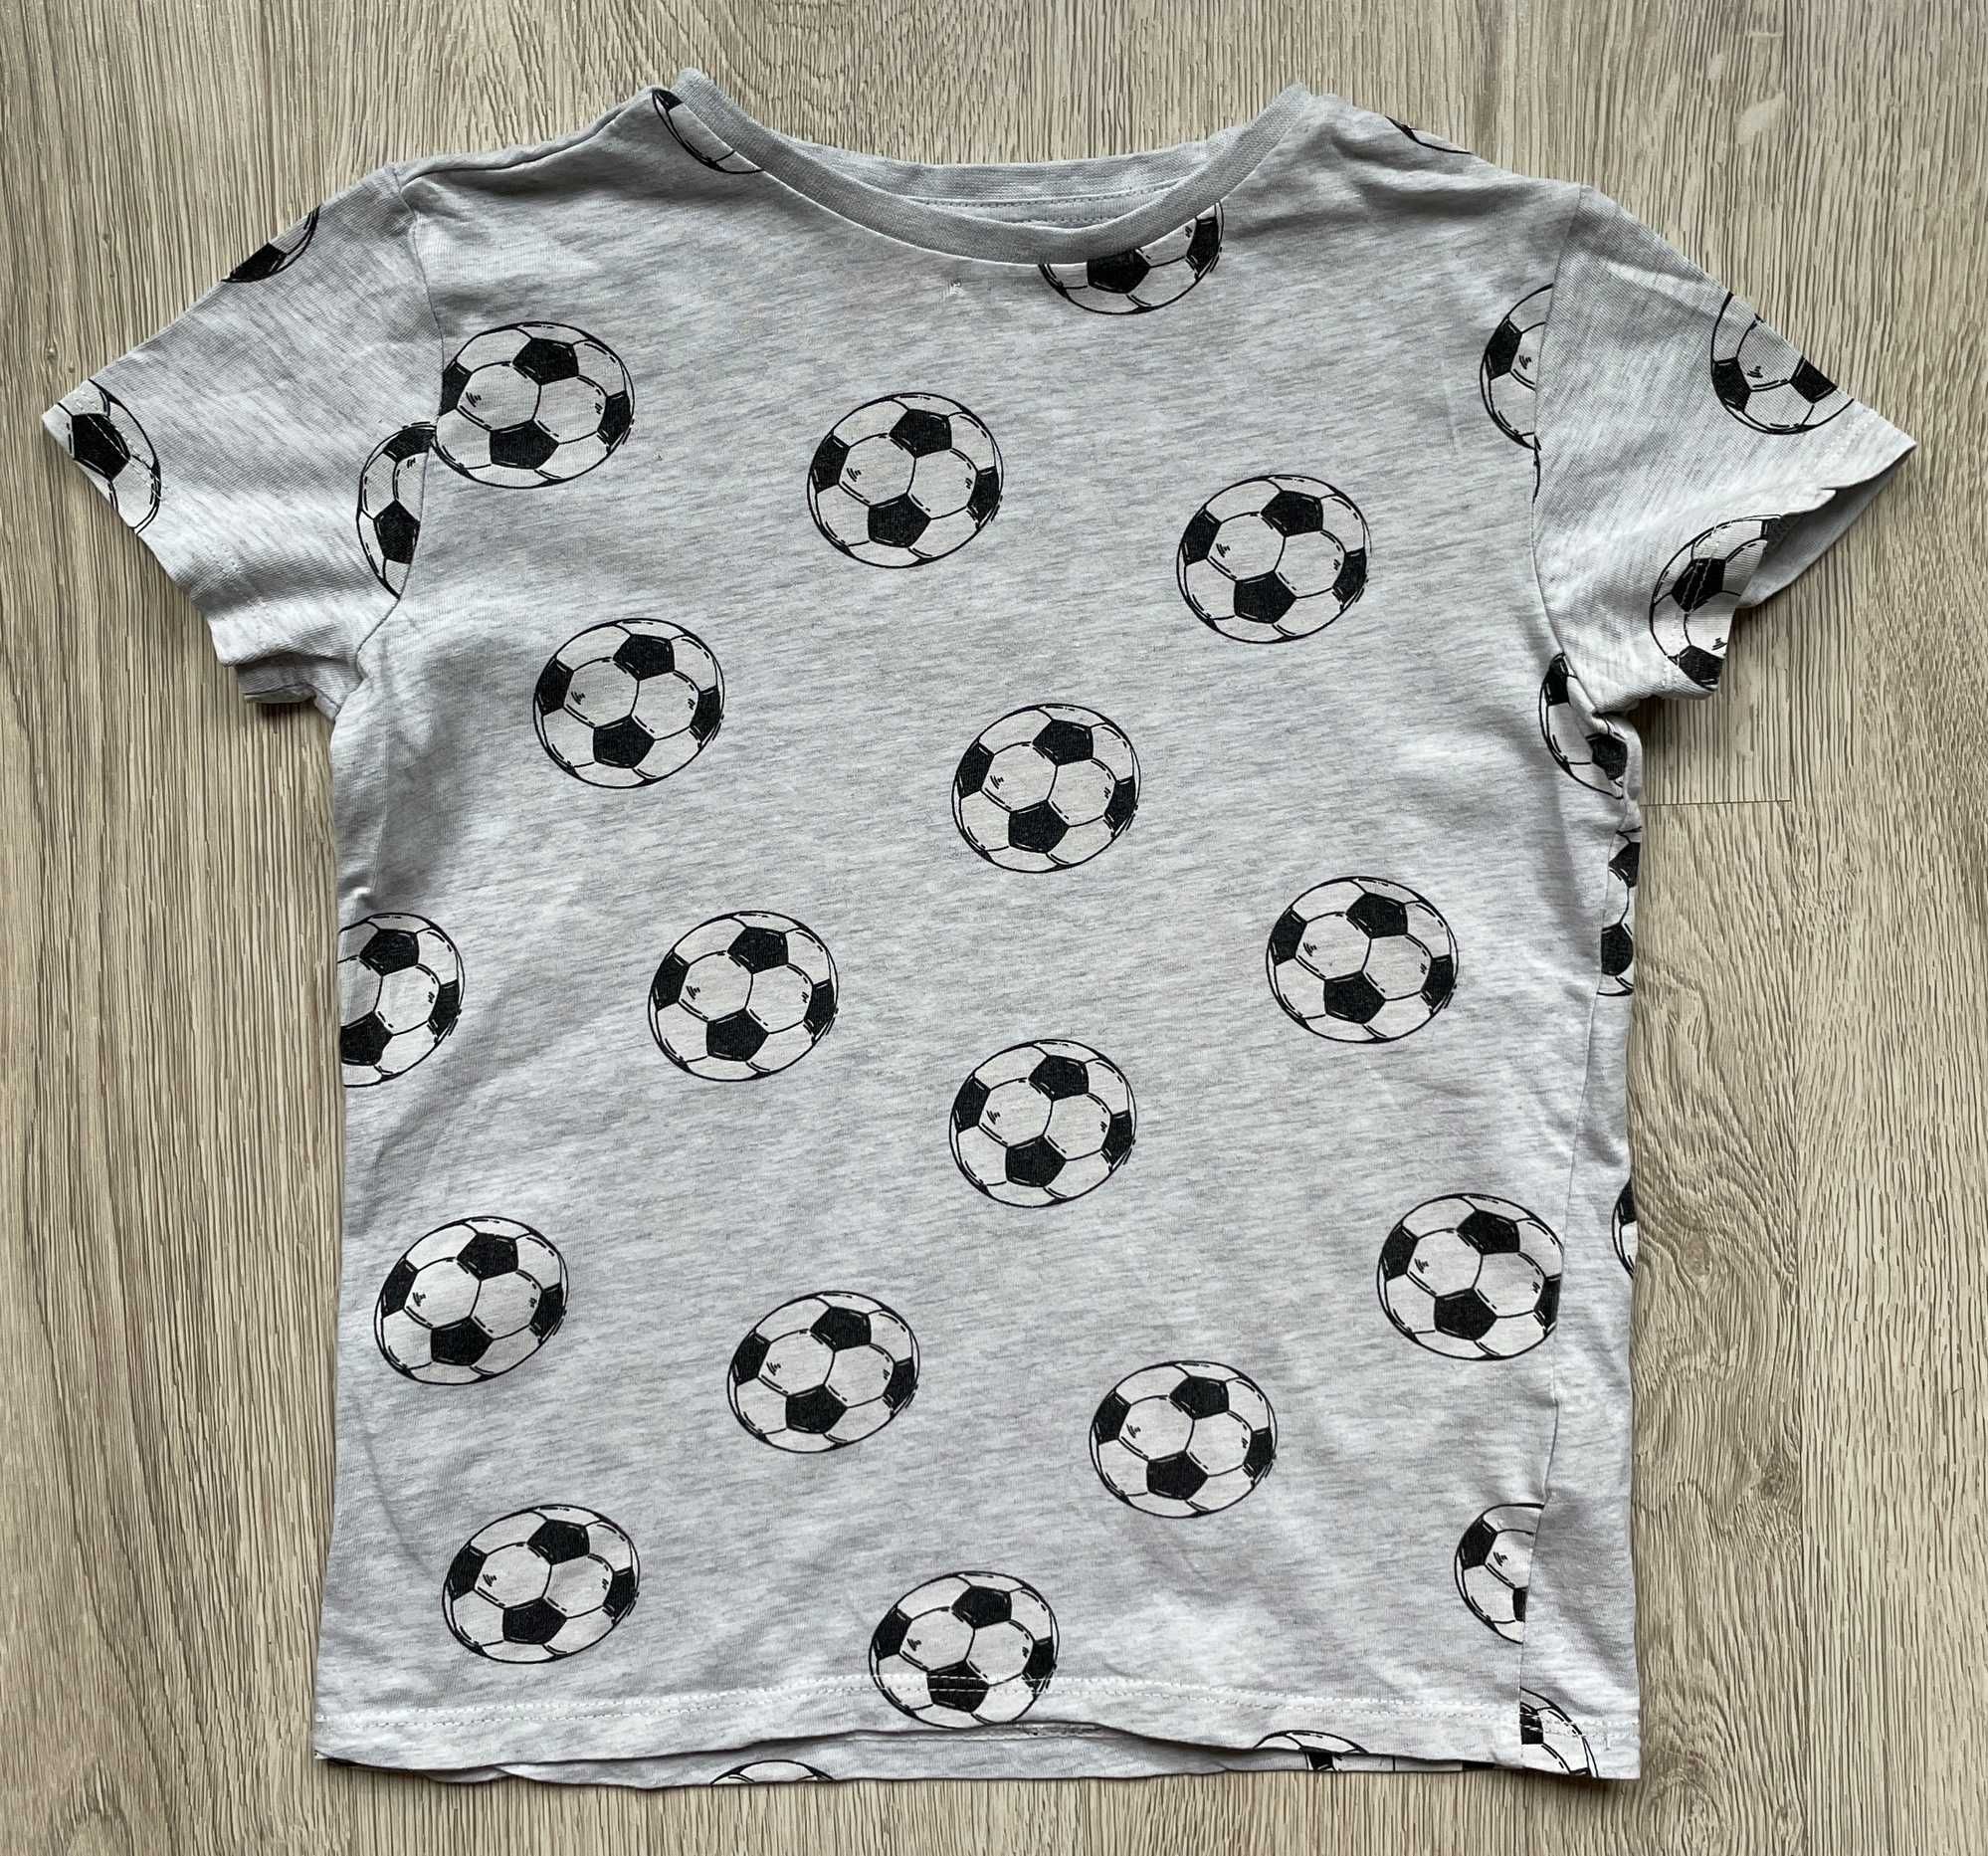 Koszulka chłopięca t-shirt nadruk piłki piłka Sinsay rozmiar 116